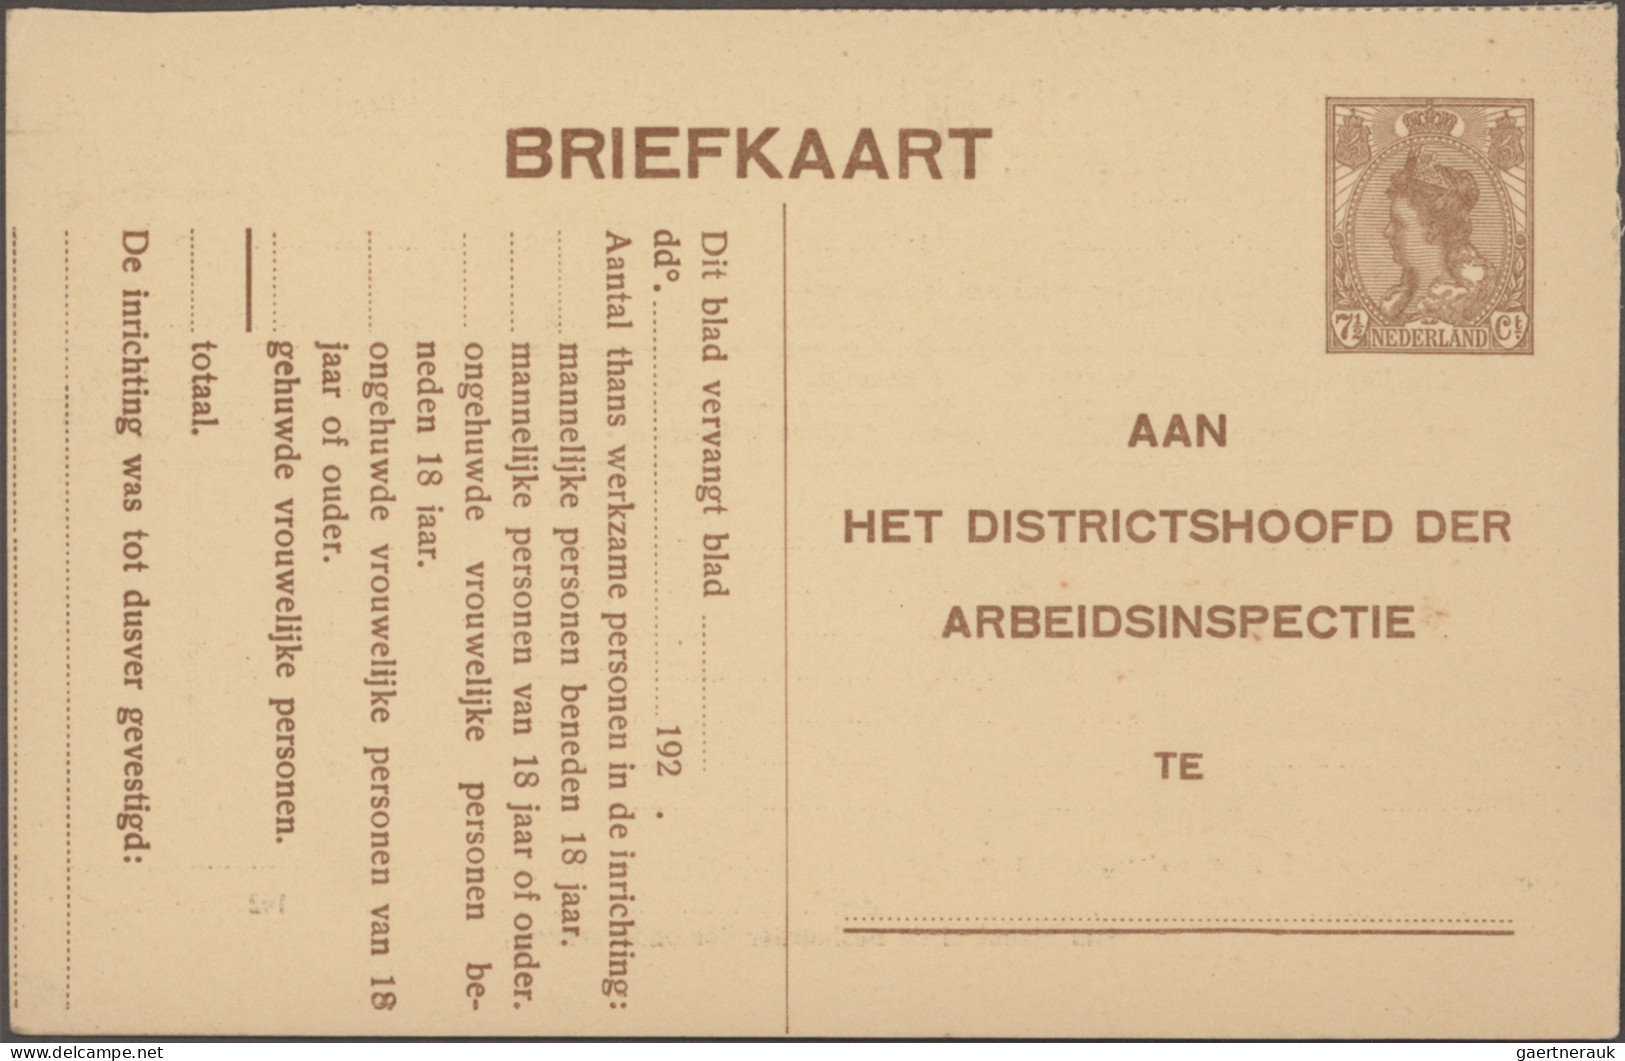 Netherlands - postal stationery: 1880/2000 (ca.), comprehensive balance of apprx